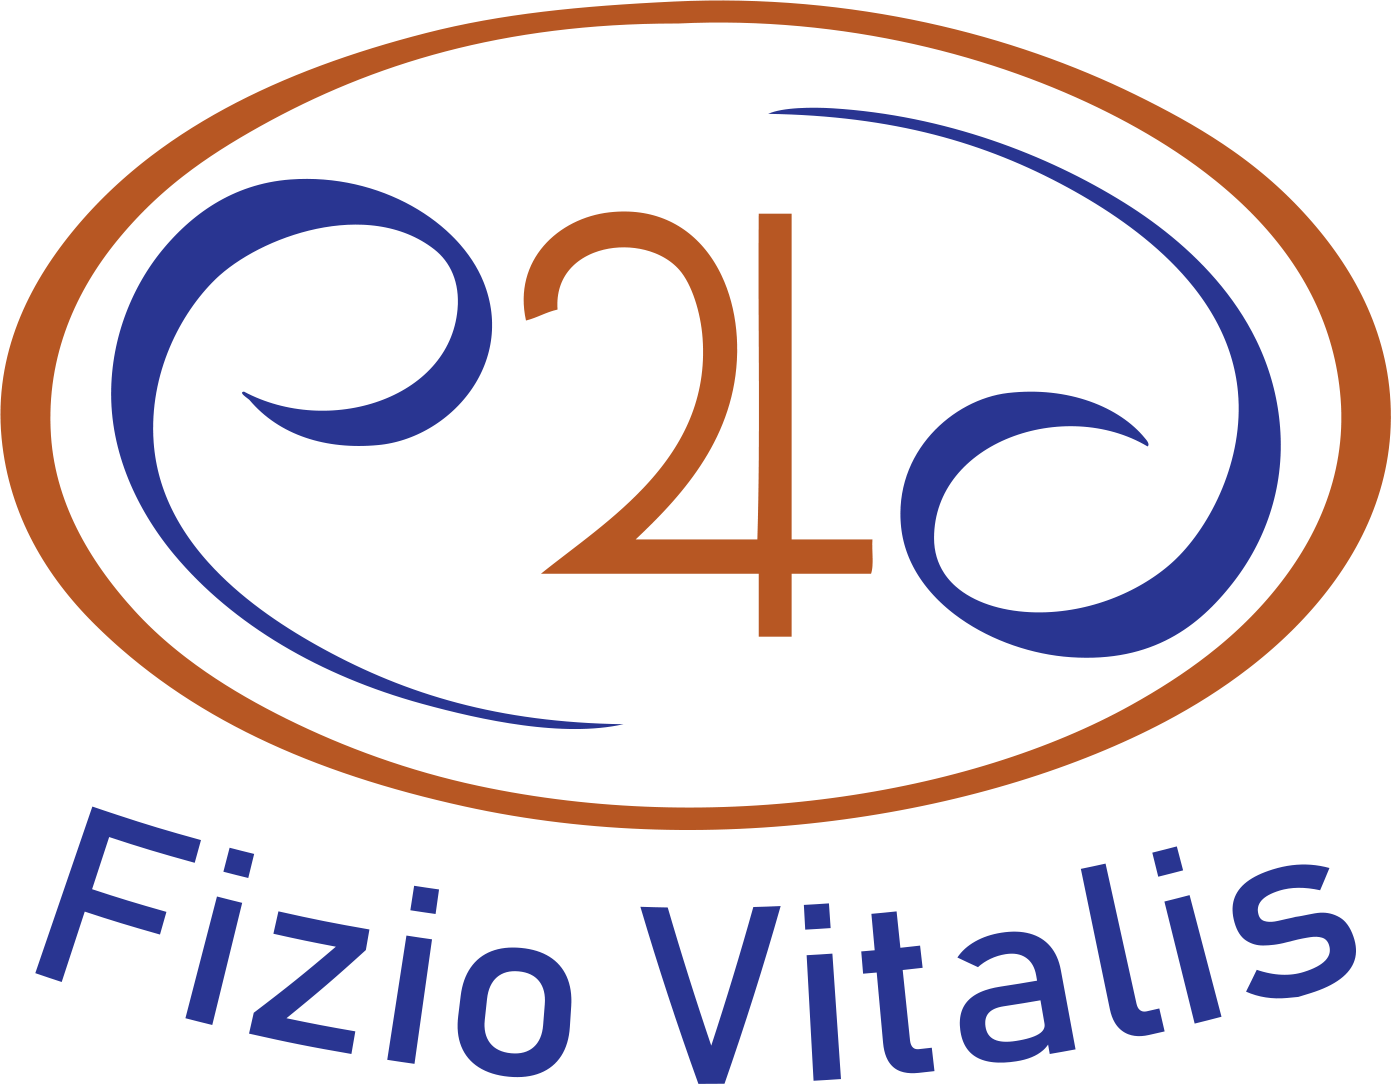 Fizio Vitalis logo